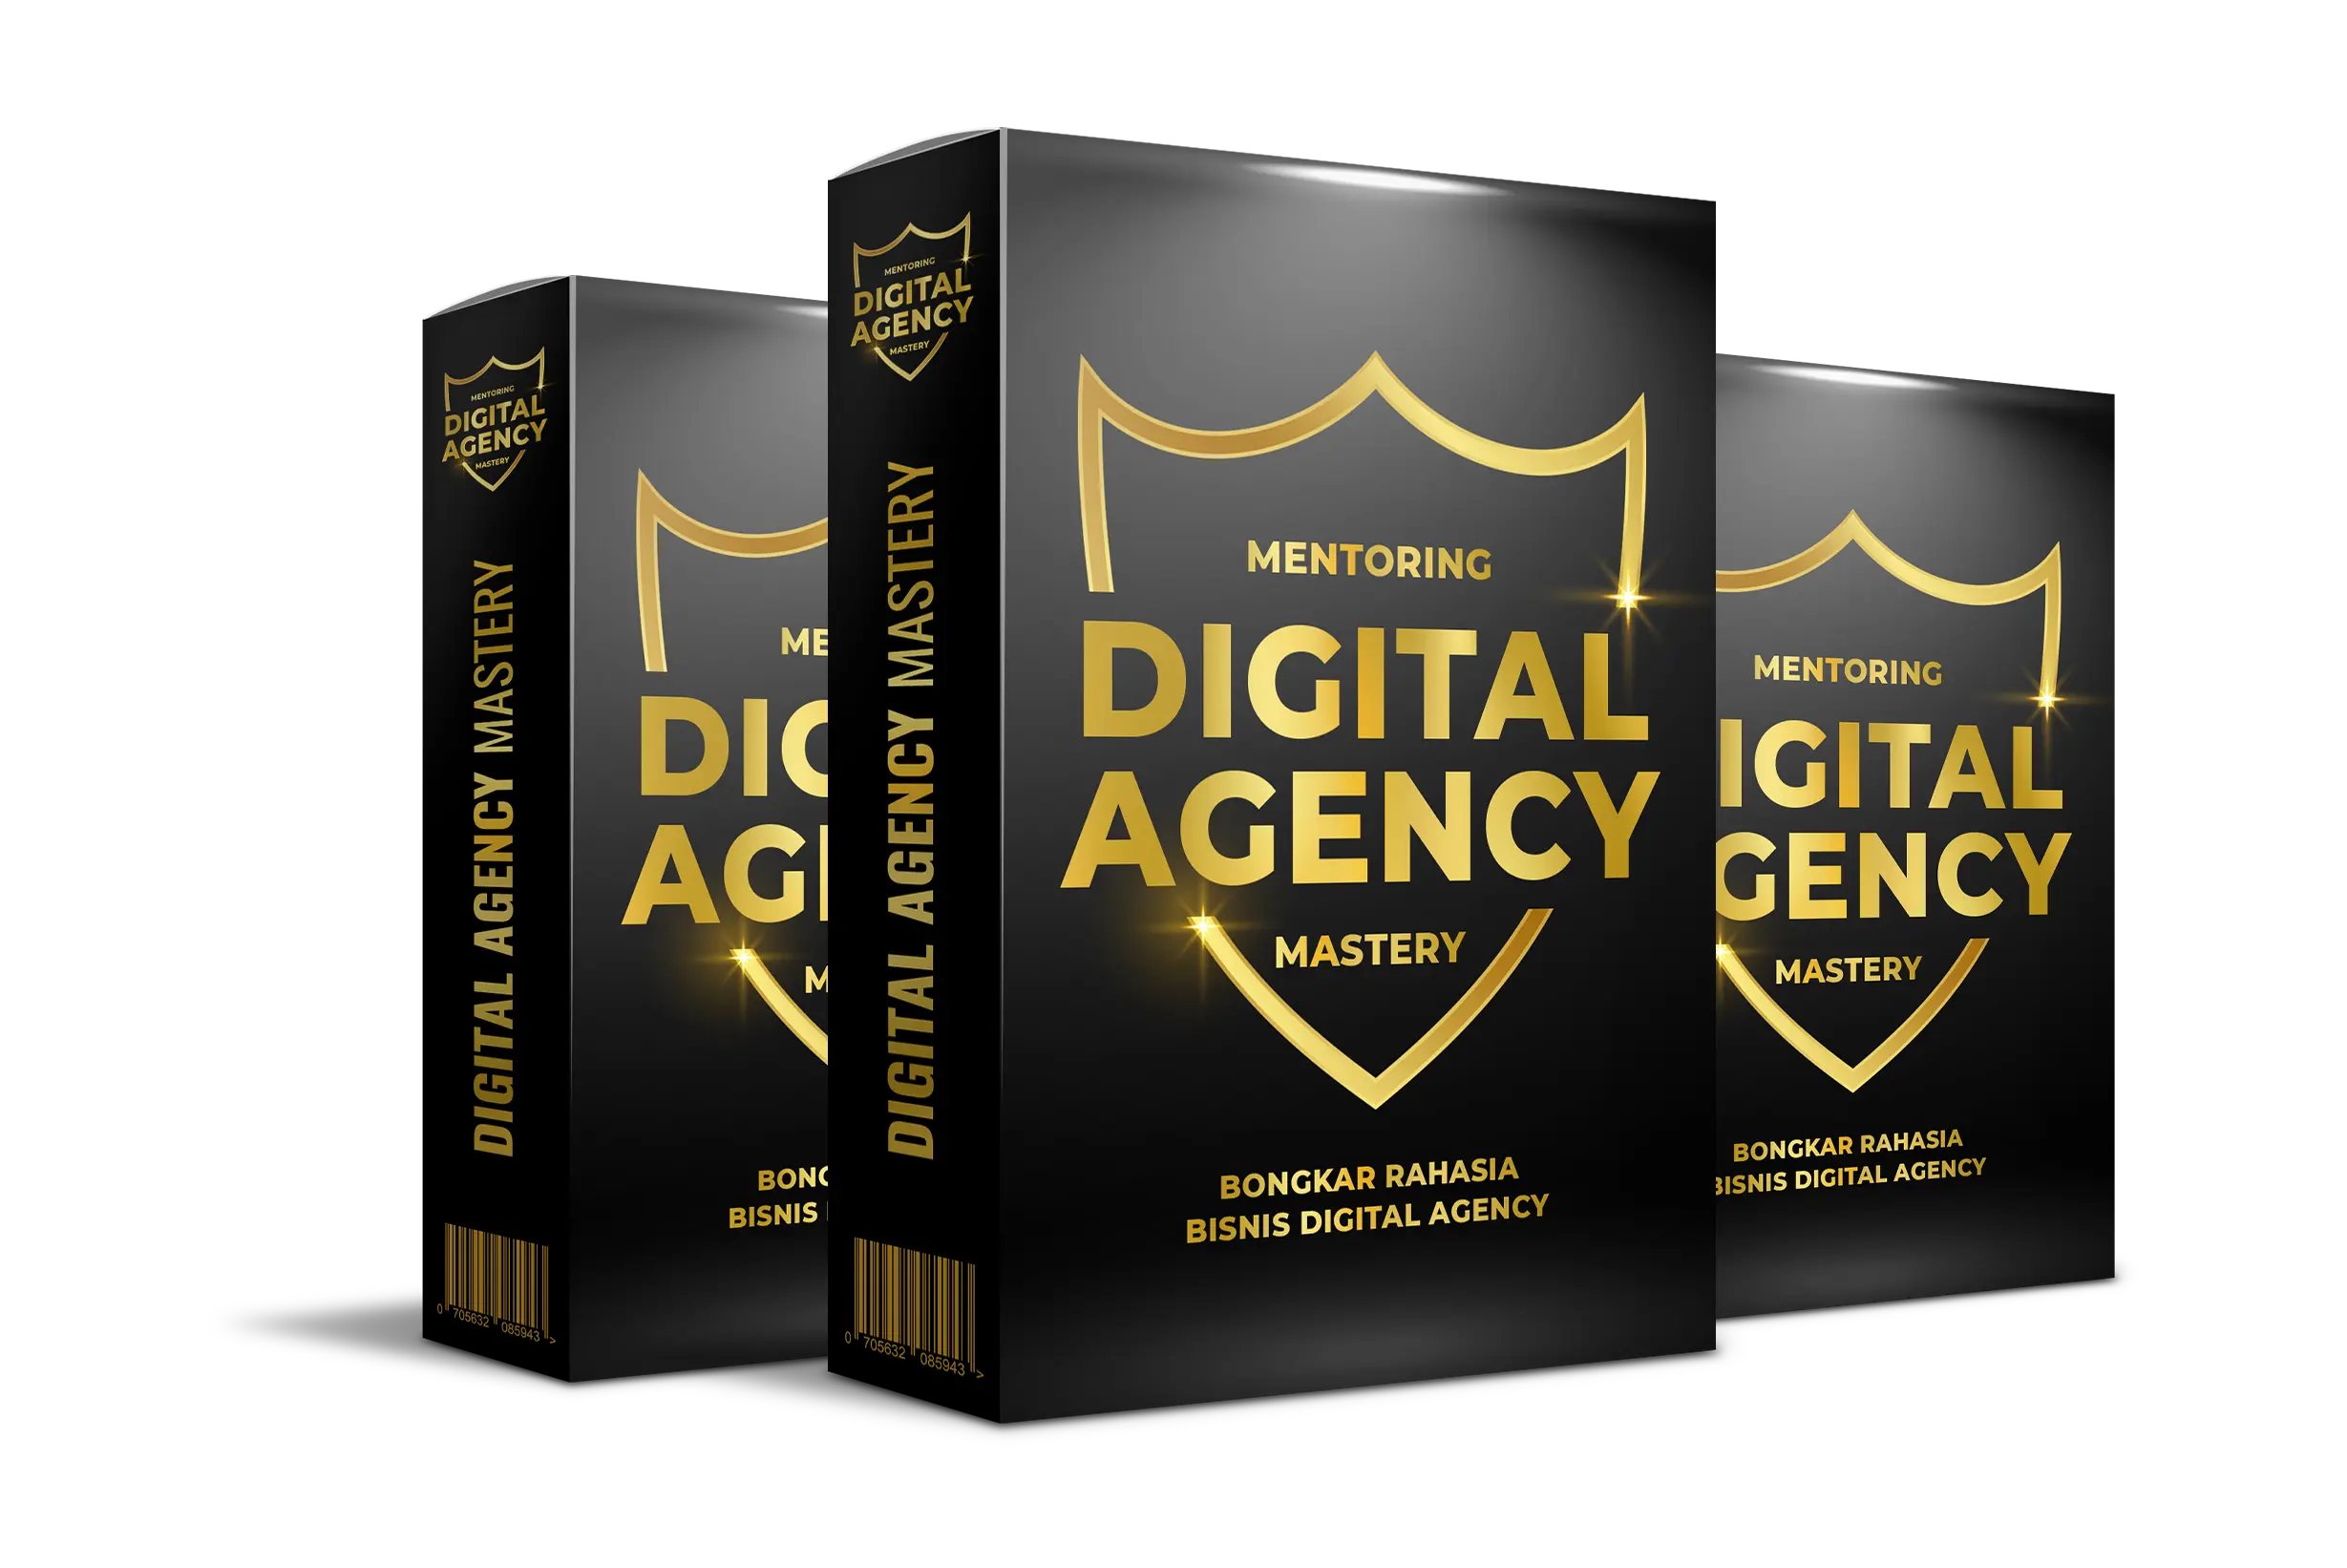 Mentoring Digital Agency Mastery Cover